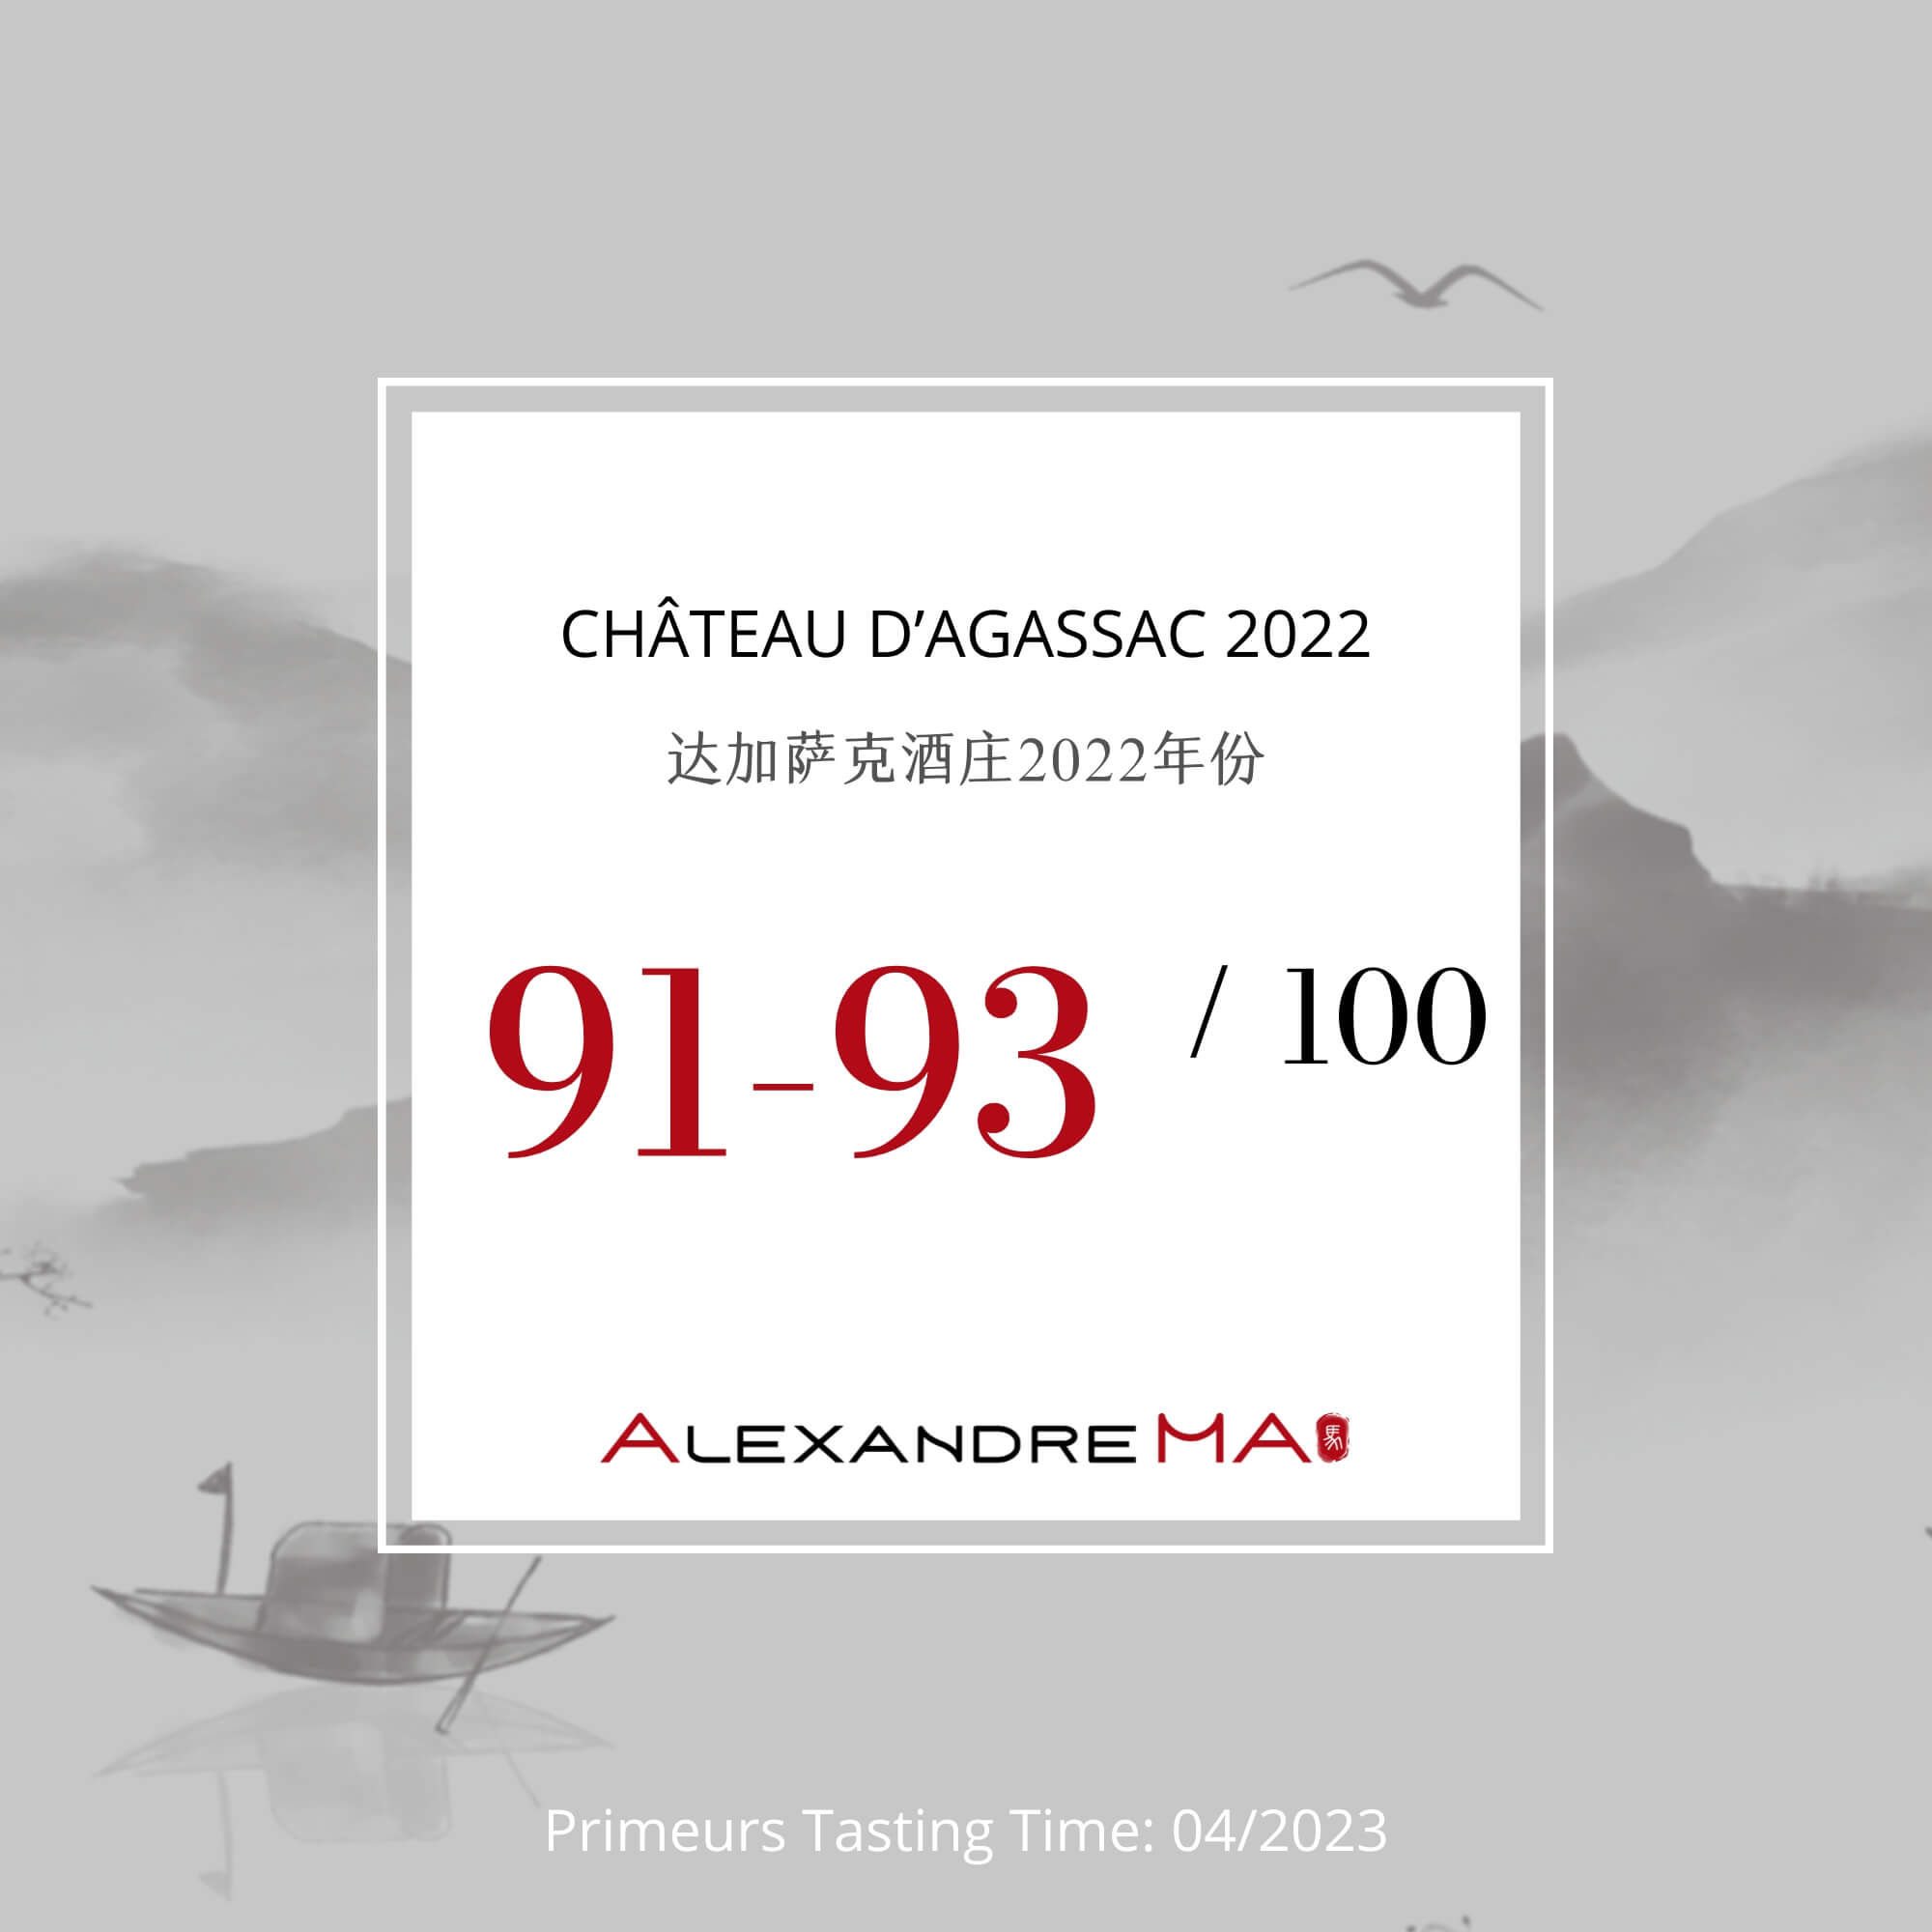 Château d’Agassac 2022 Primeurs - Alexandre MA